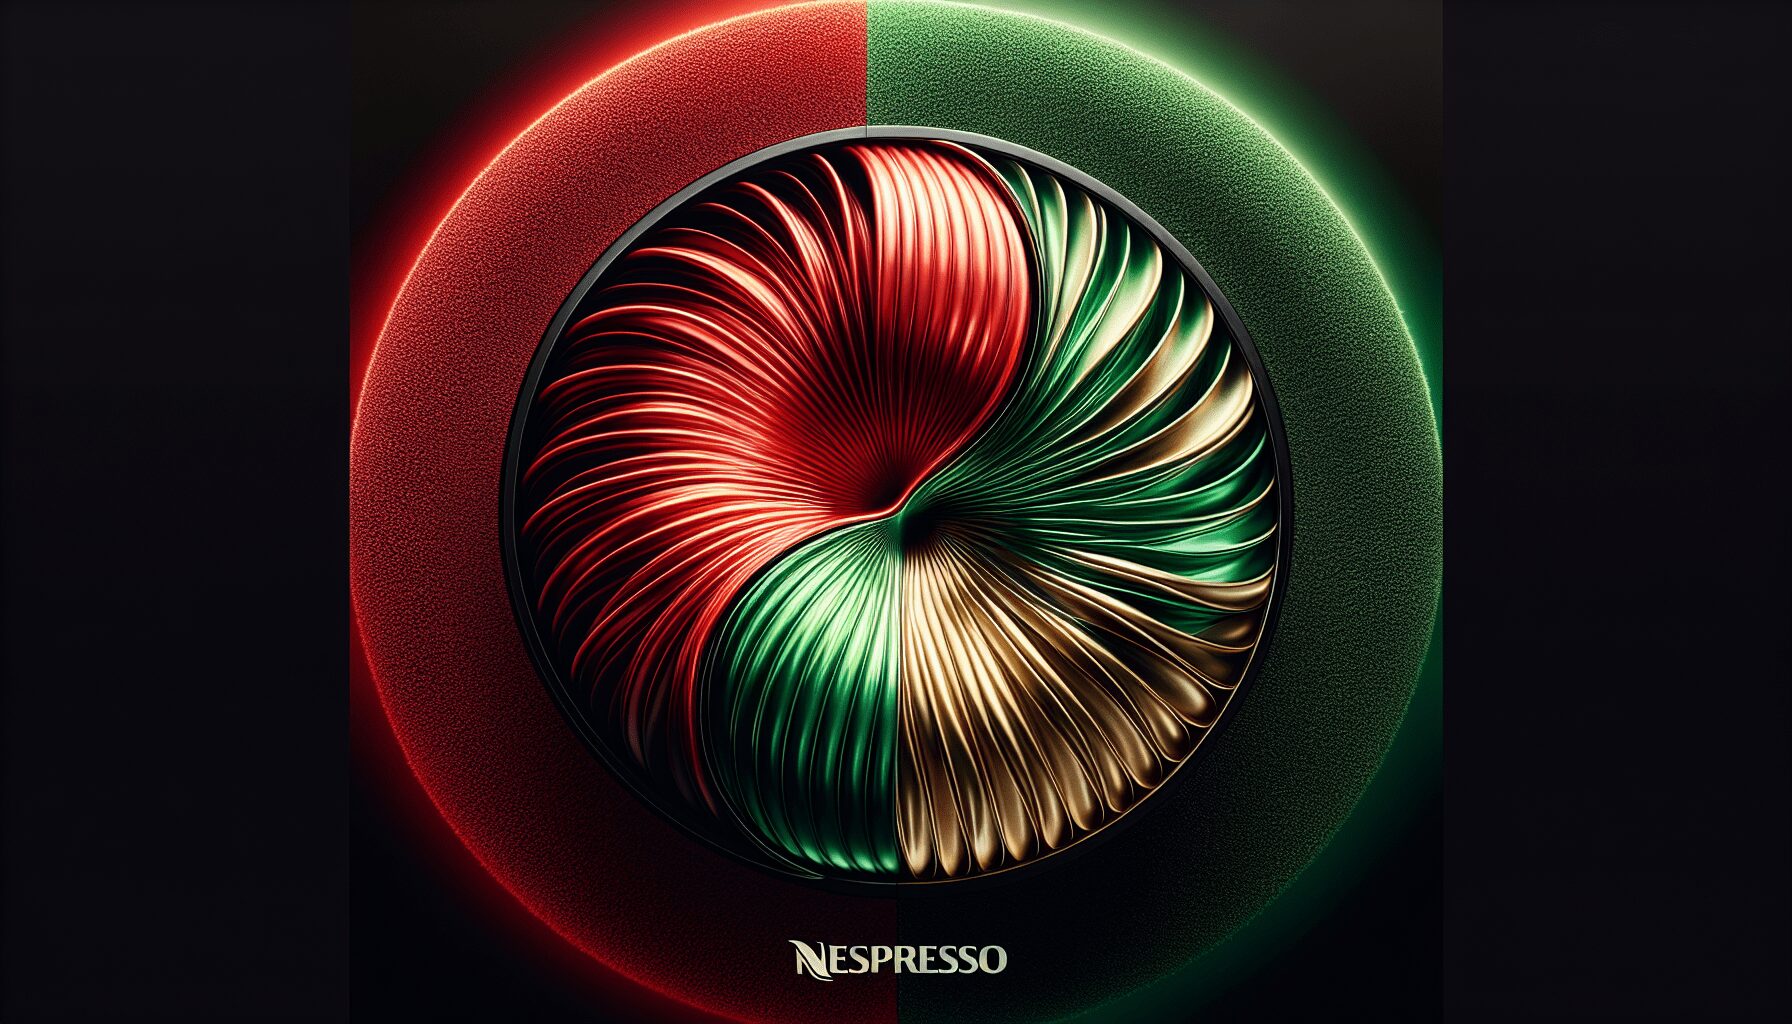 Nespresso Limited Edition: Half Red, Half Green